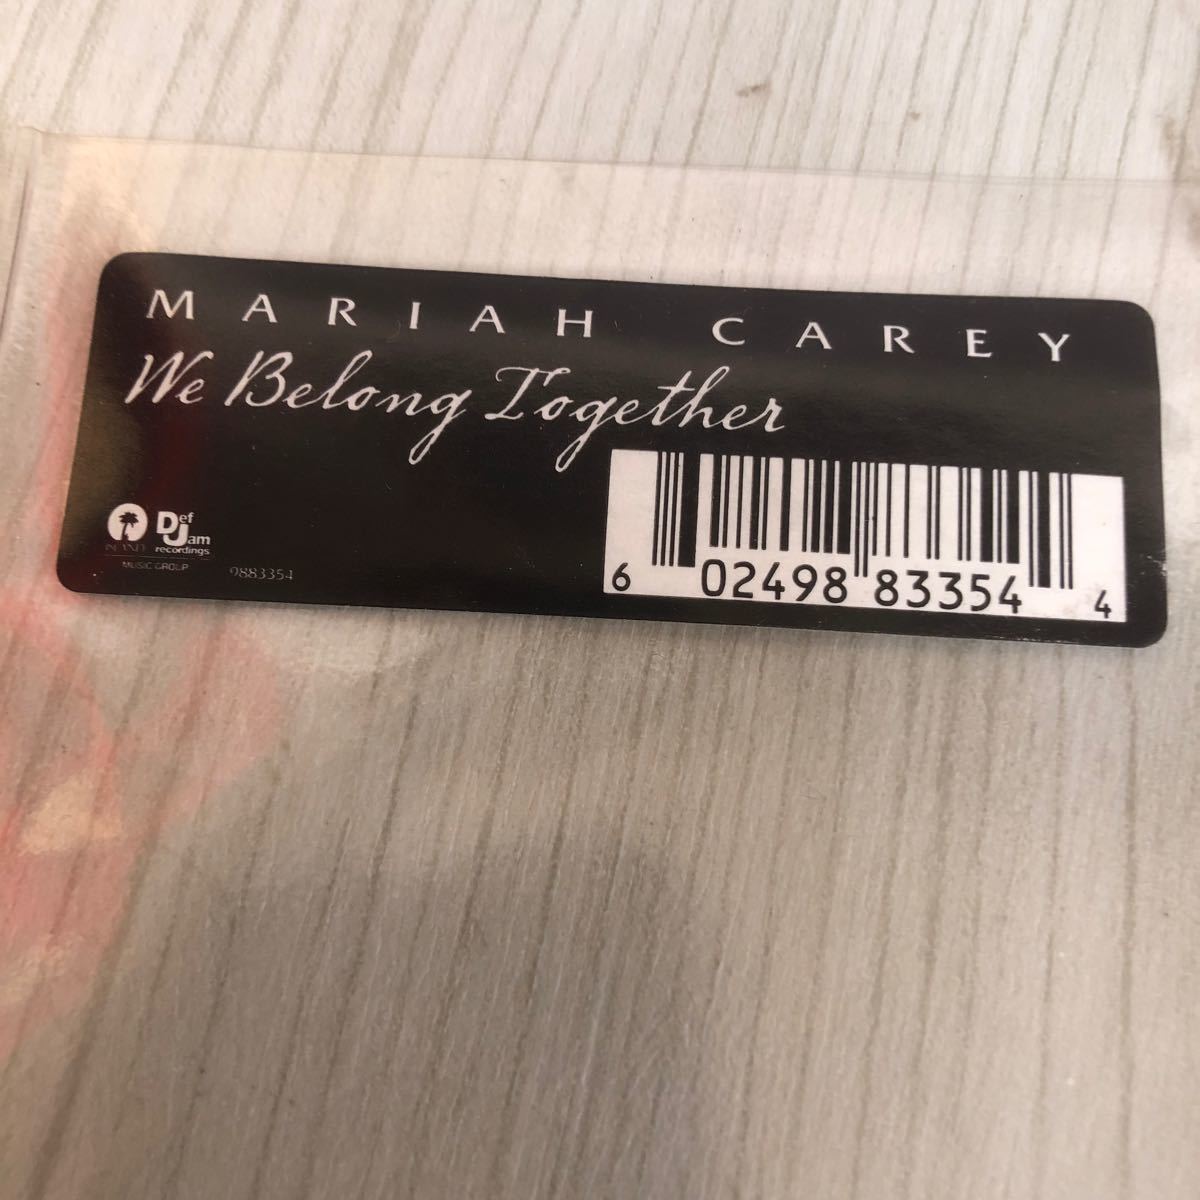 ◇LP ピクチャー盤 Mariah Carey マライア・キャリー We Blong Together 2005年 平成17年 12インチ 9883354-A ライナー無 _画像3